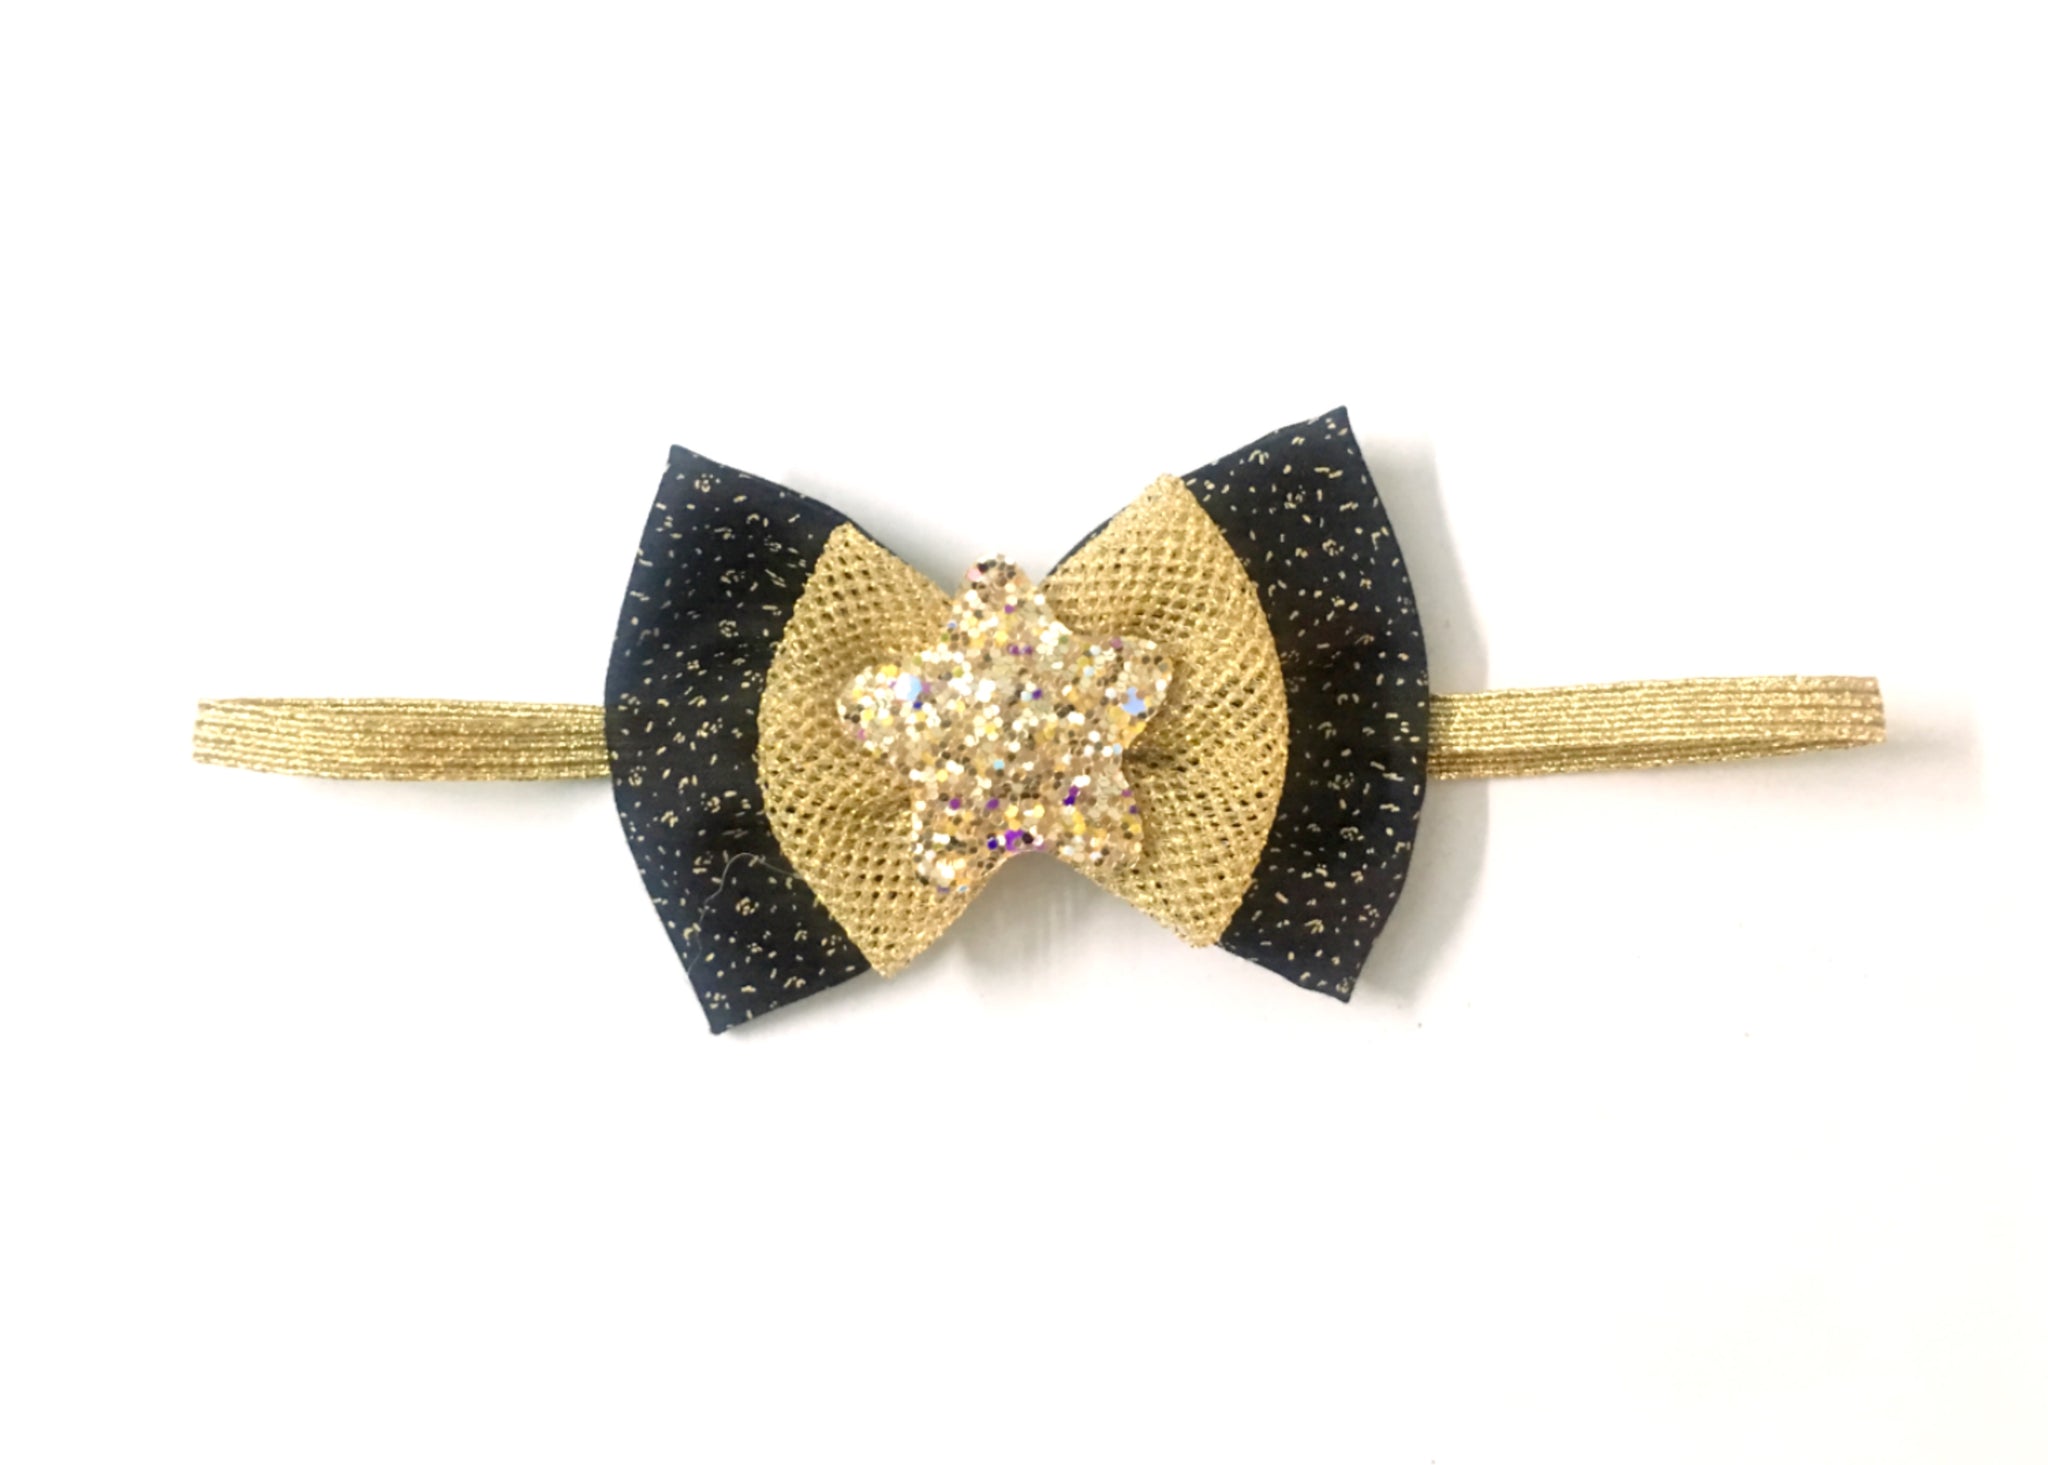 Double Bow Star Applique Headband - Black & Golden